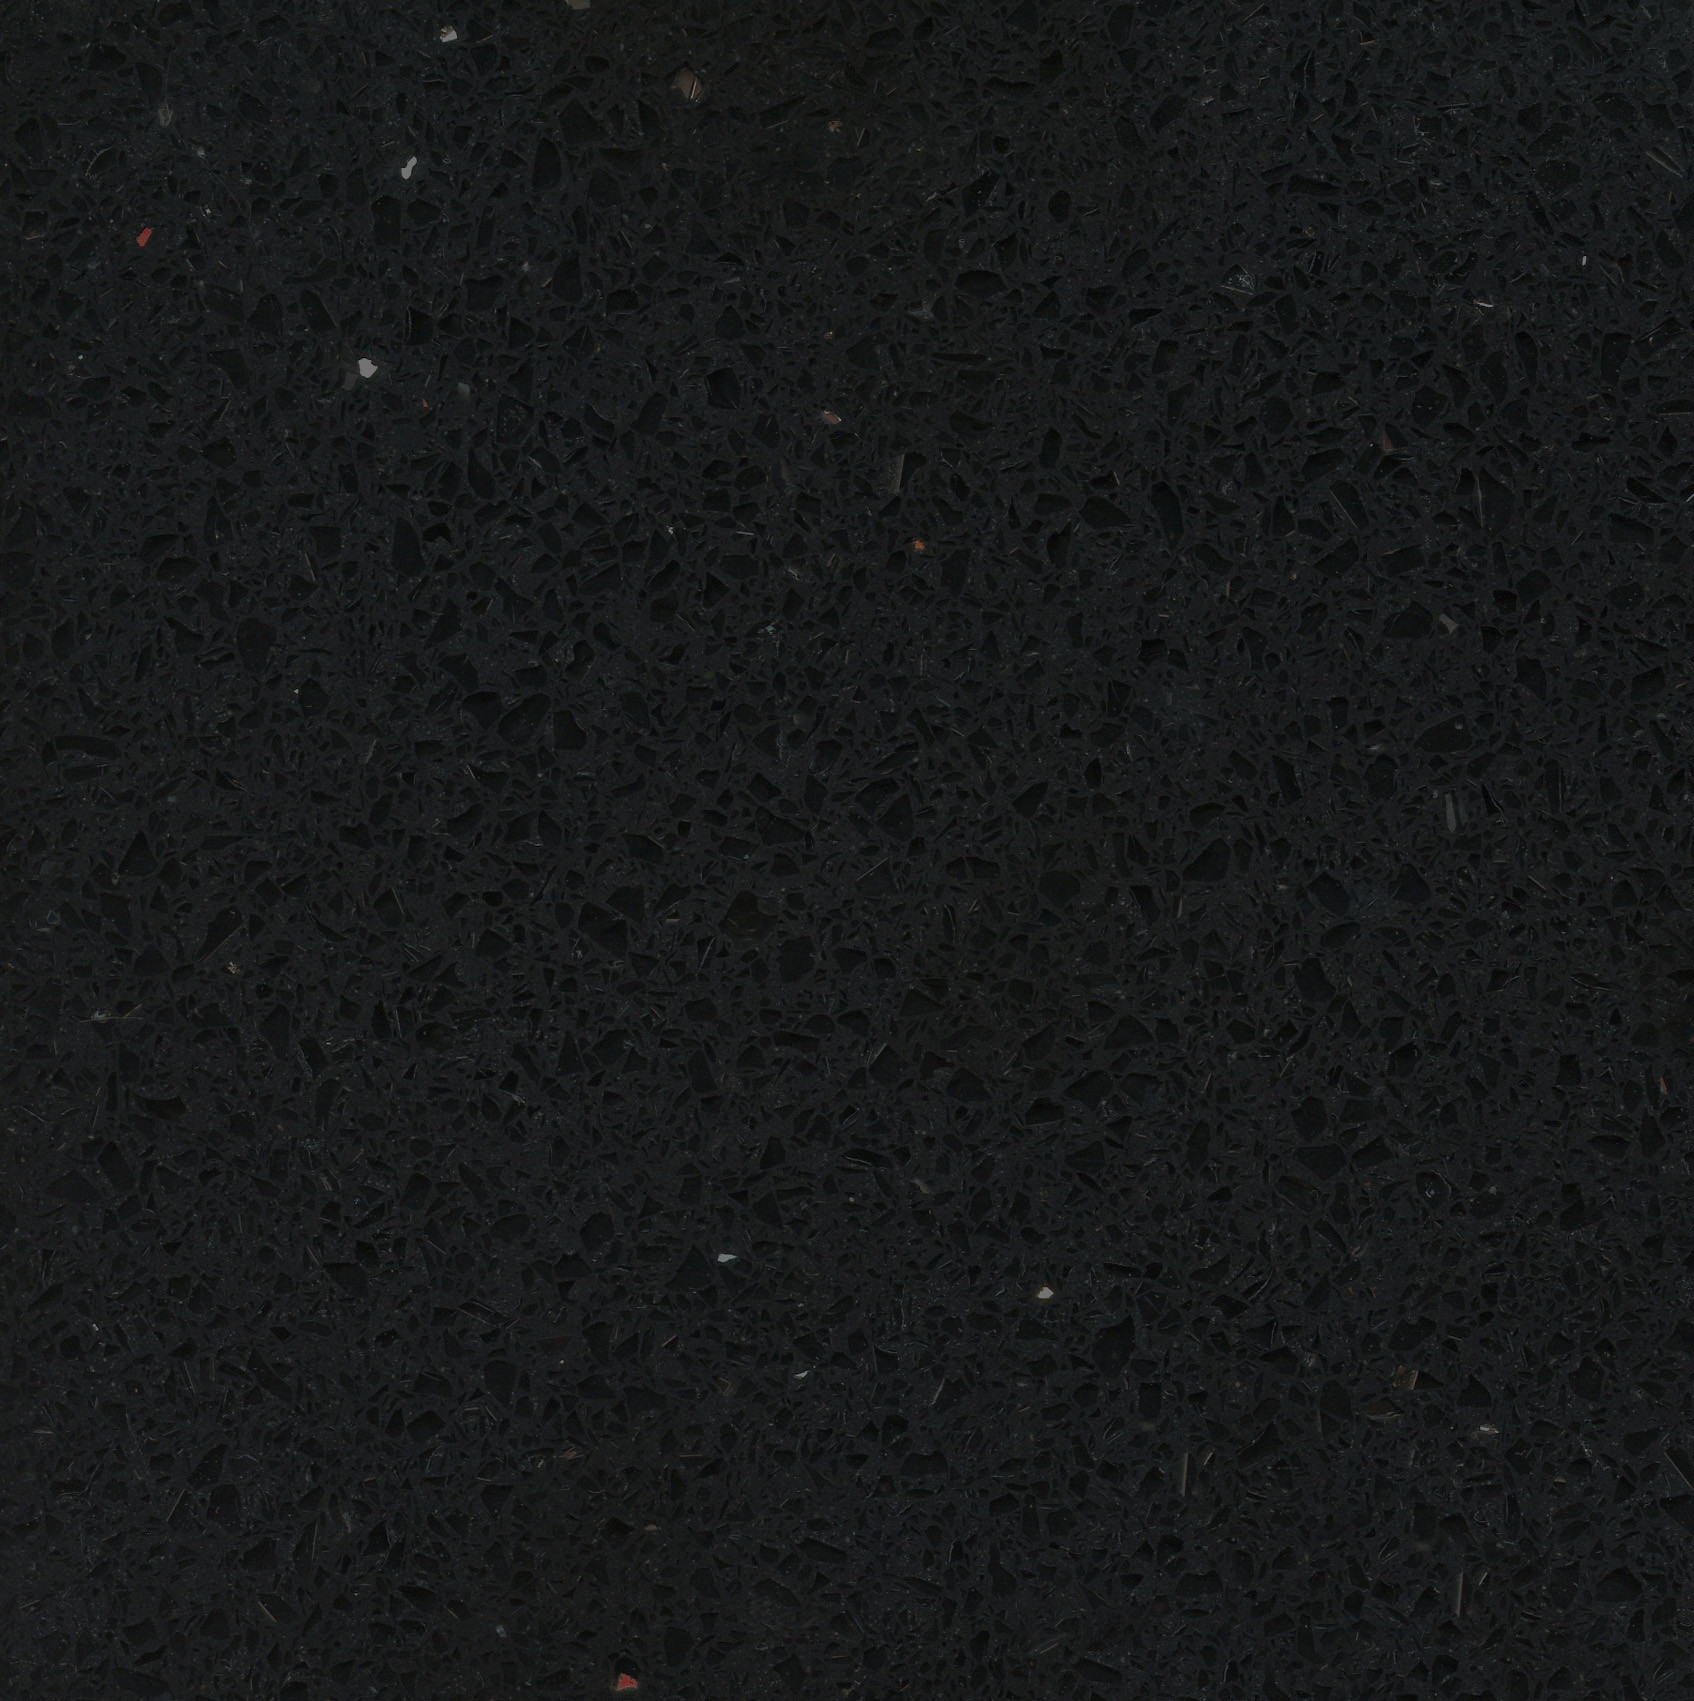 Stellar Night quartz countertop close up